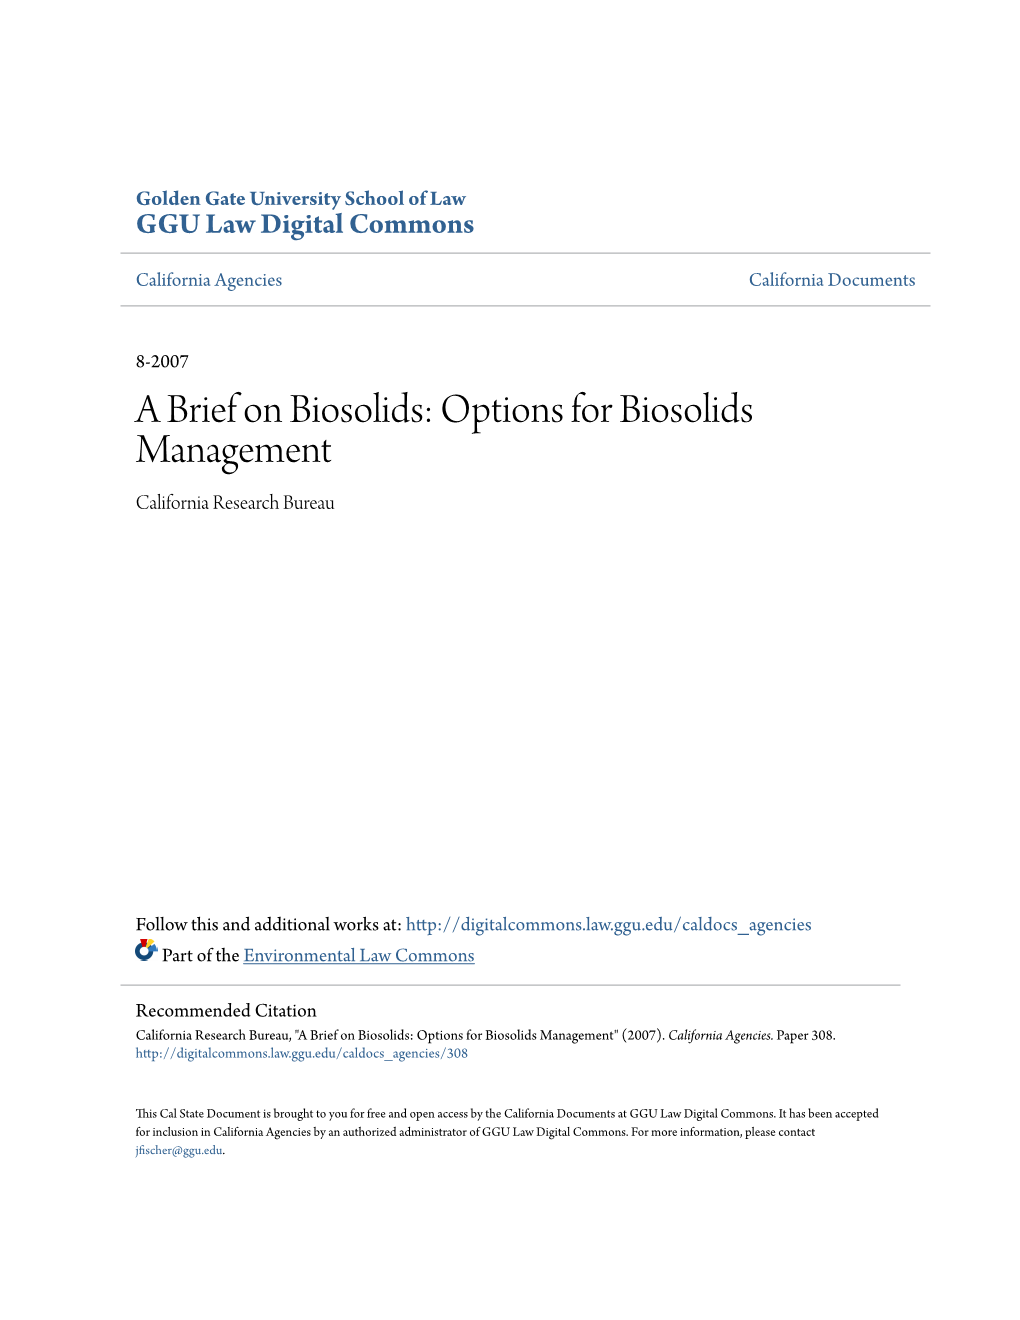 Options for Biosolids Management California Research Bureau